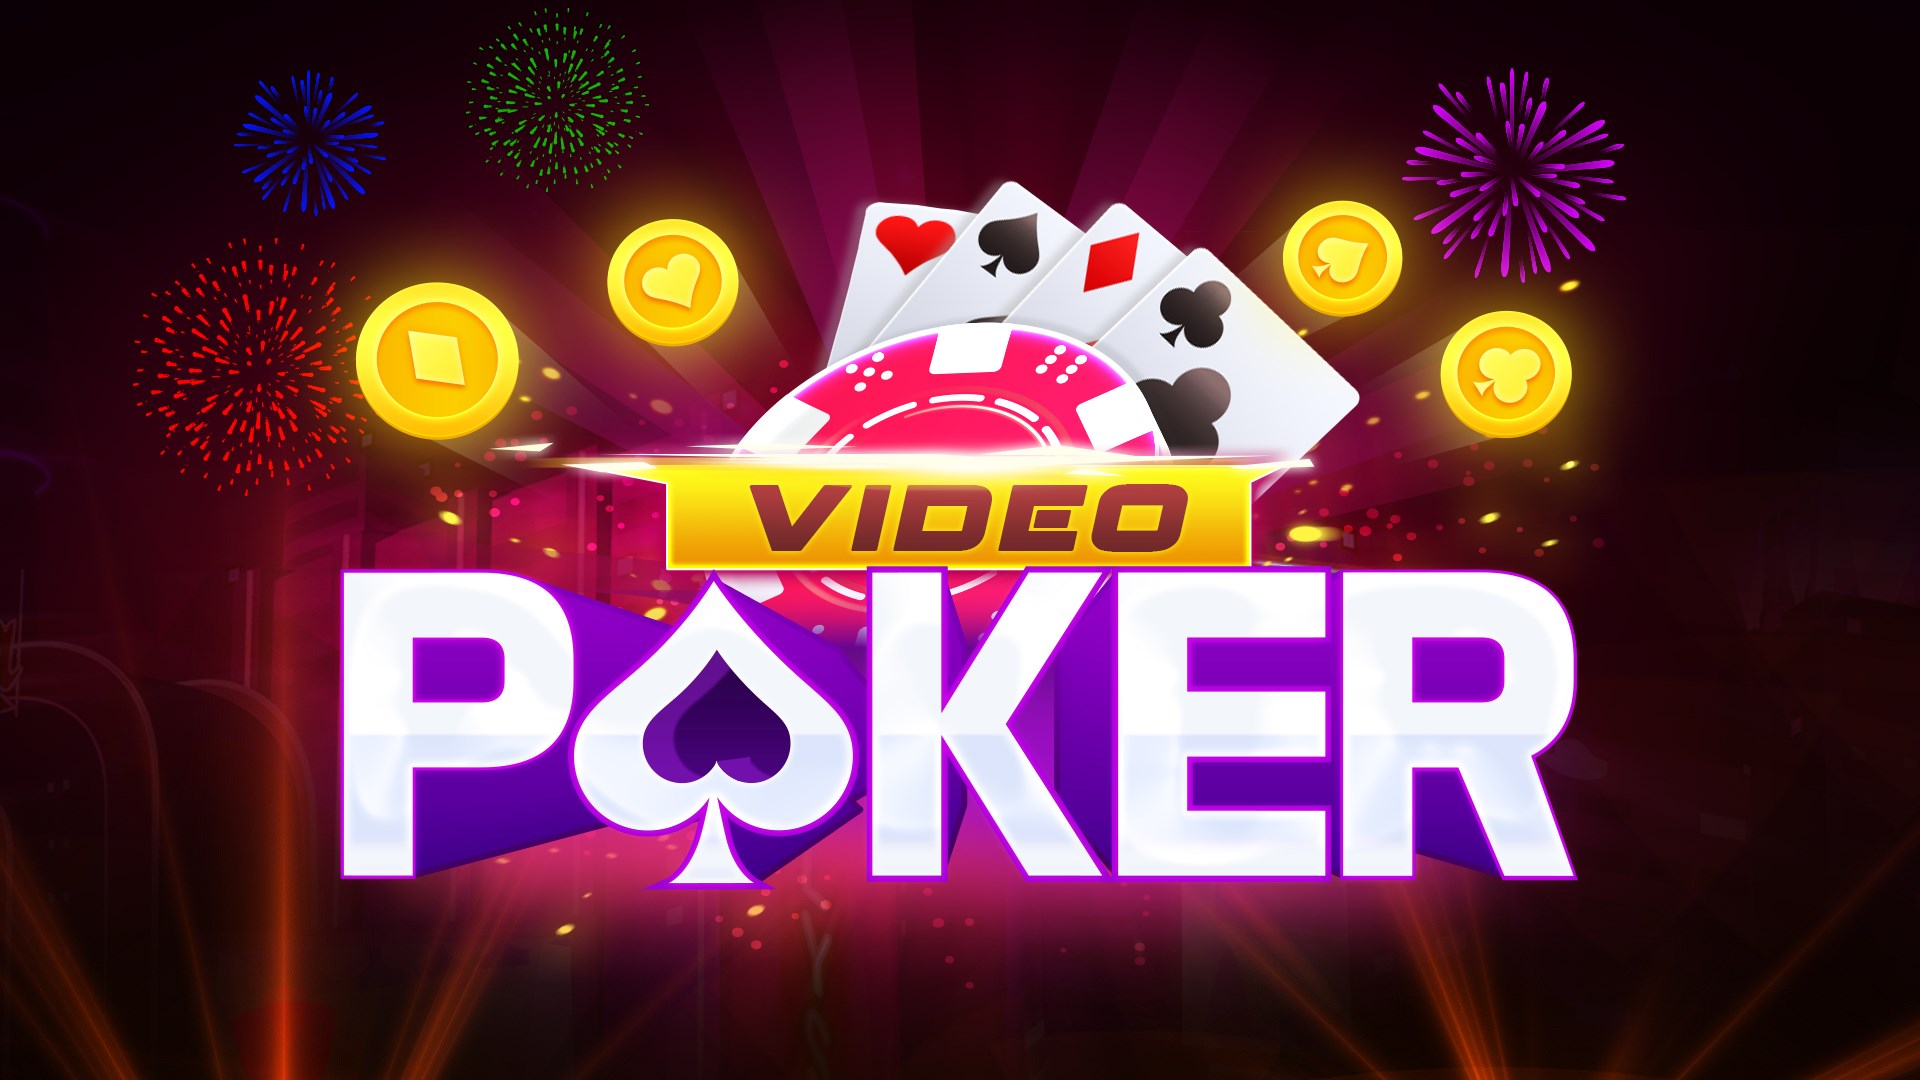 Get Video Poker: Fun Casino Game - Microsoft Store en-IN